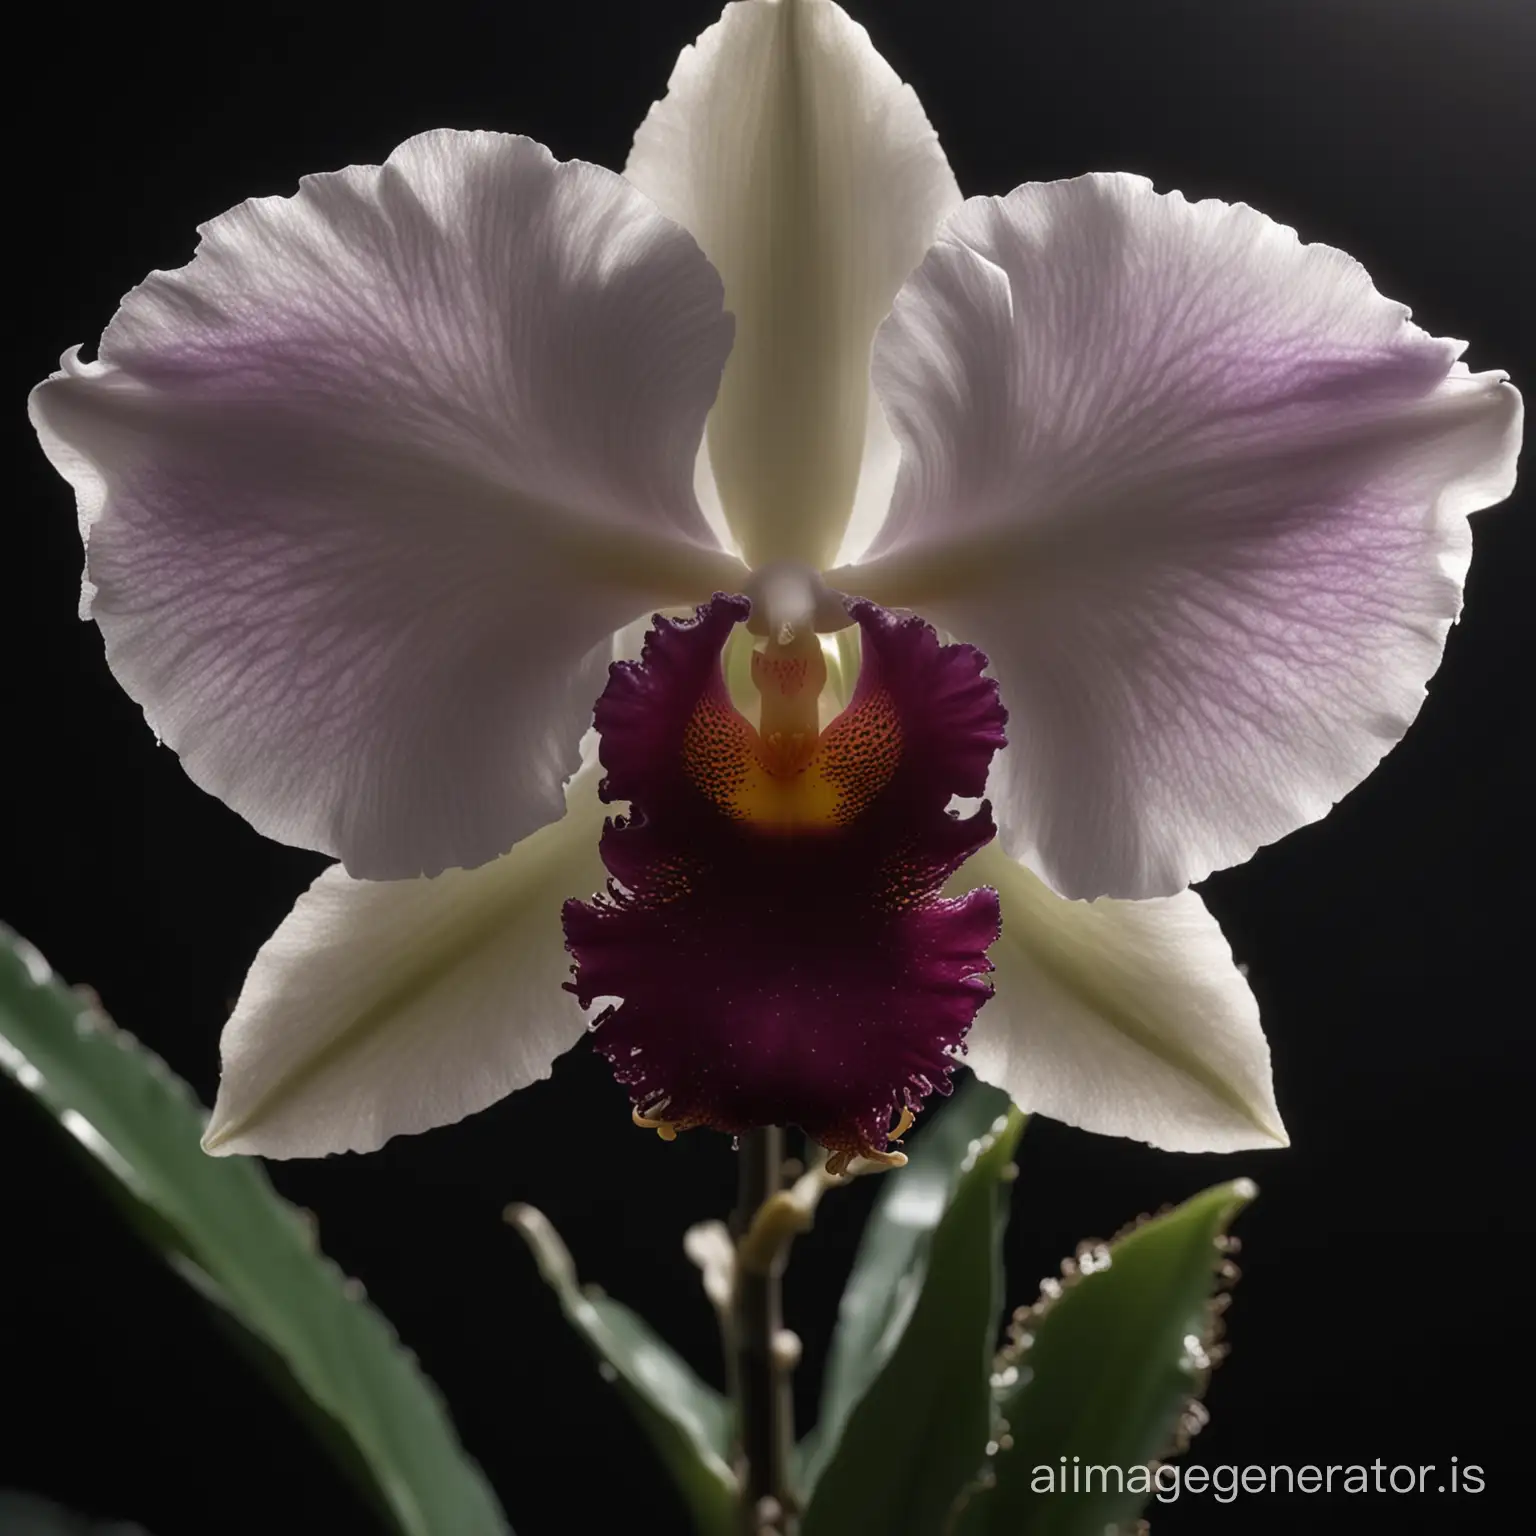 Realistic-Glowing-Cattleya-Orchid-in-HD-4K-Illuminated-Beauty-in-Darkness